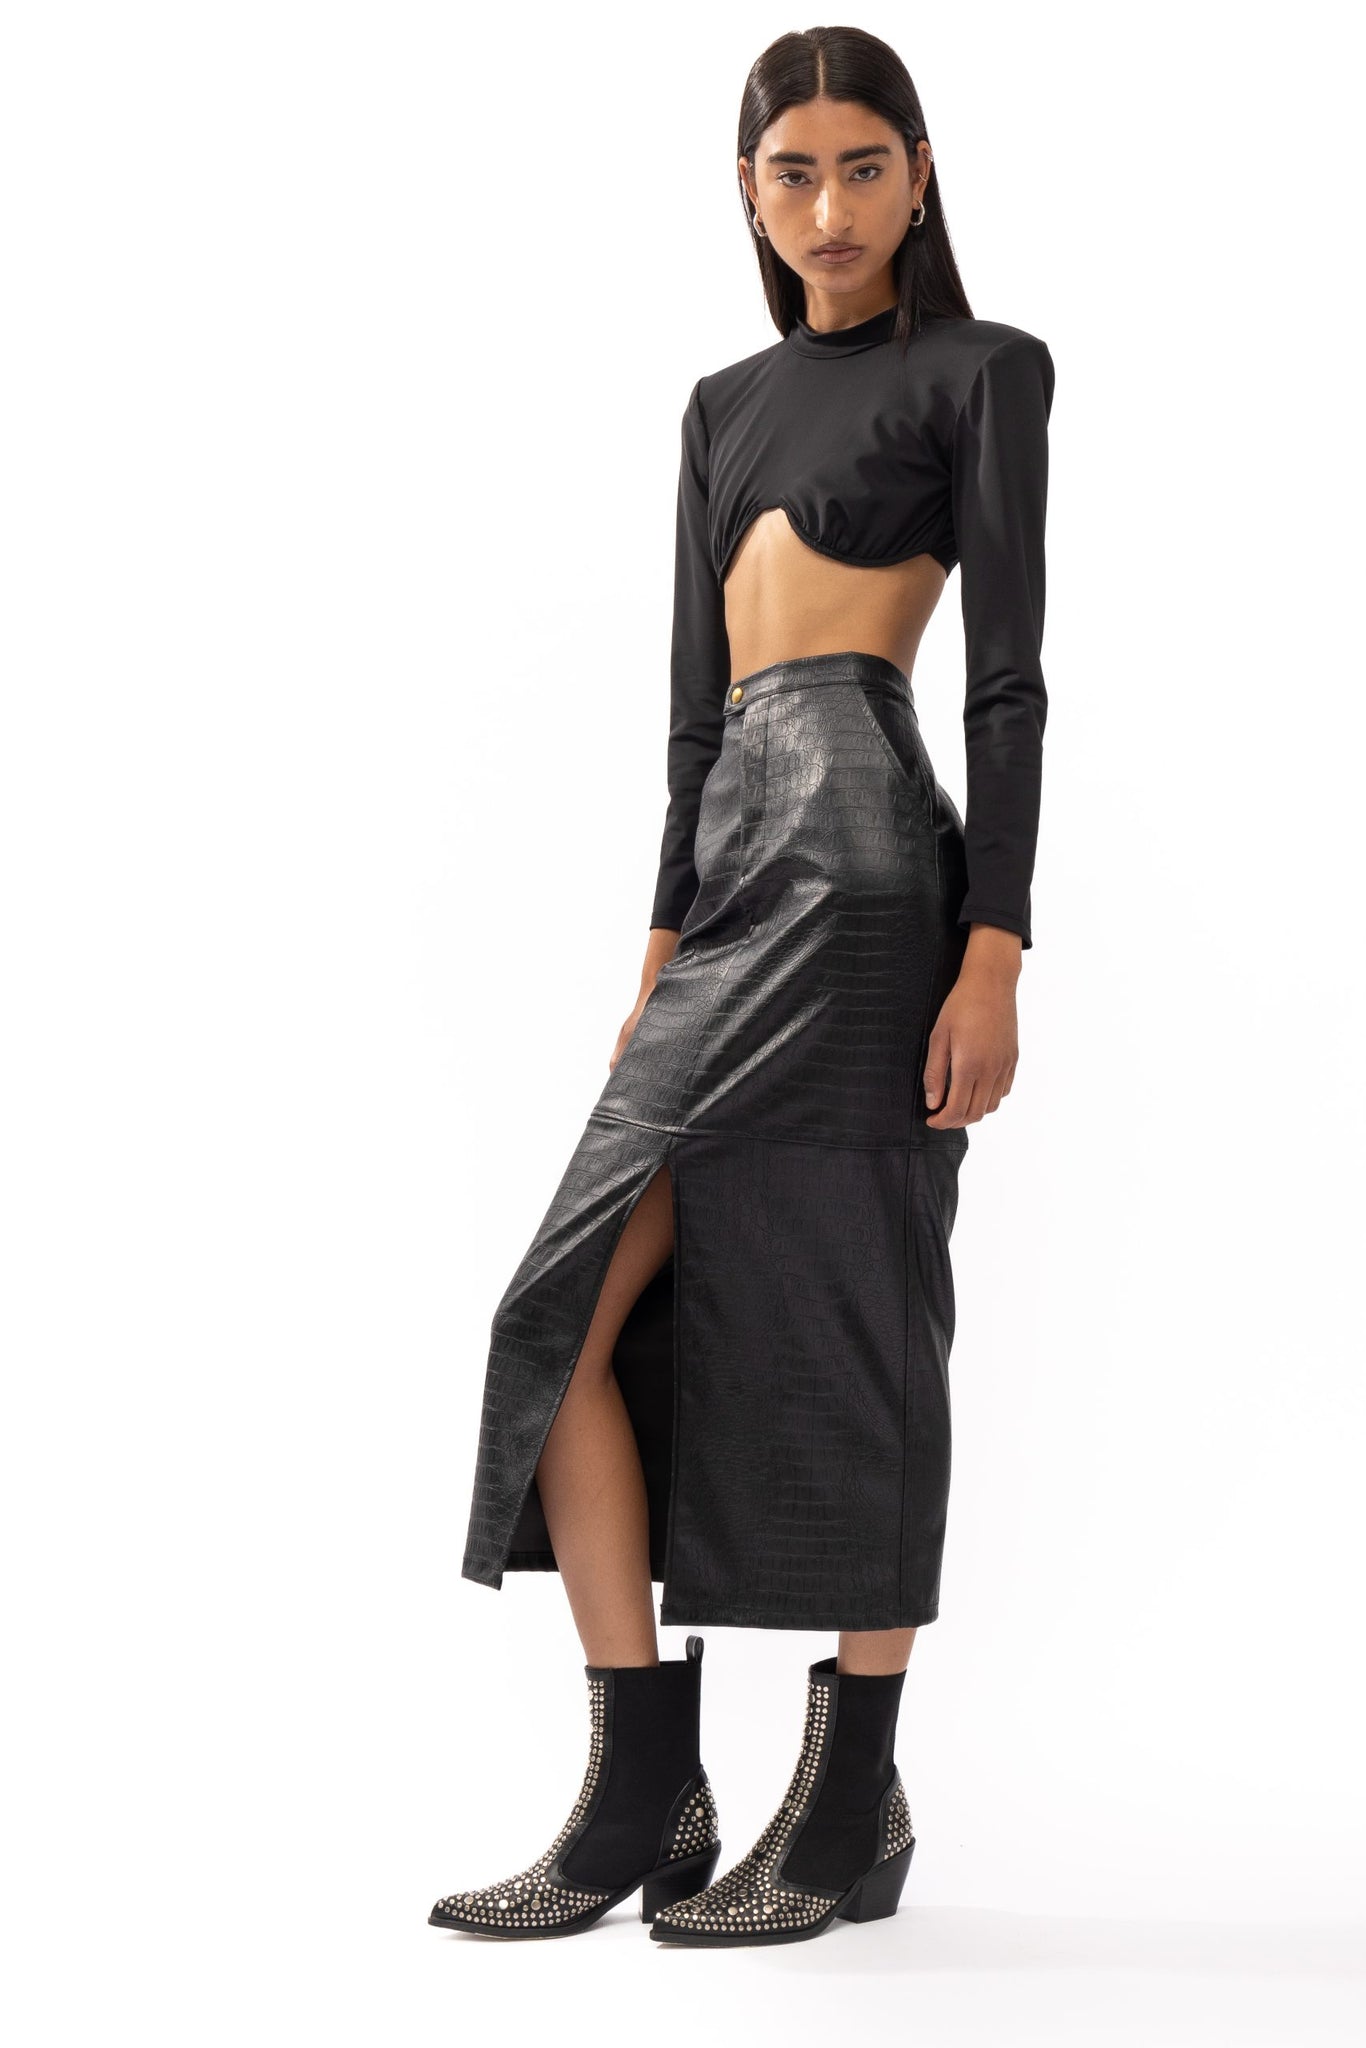 Gala Black Skirt